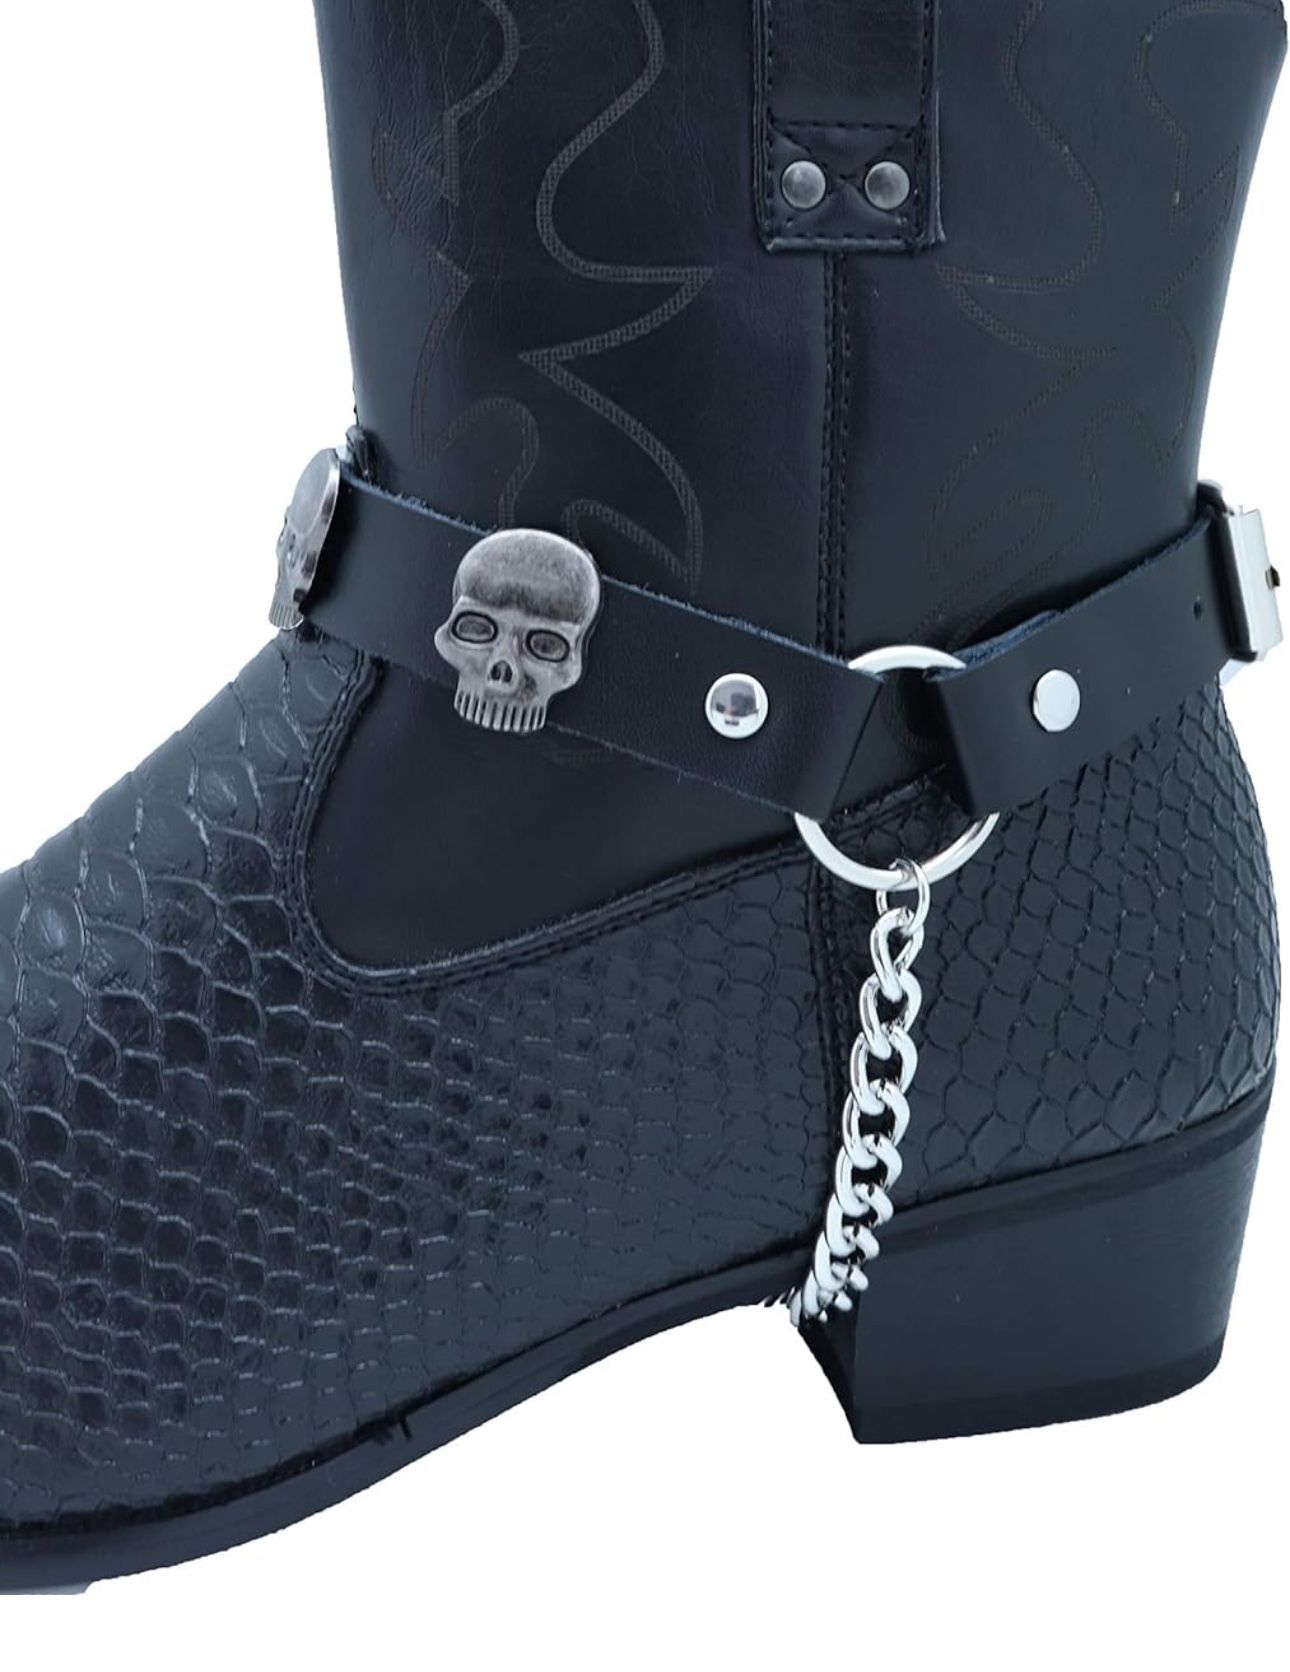 Men Biker Boot Bracelets New Black Pair Straps Silver Metal Chains Shoe Shotgun Shell Charm Motorcycle Accessory Payed $35